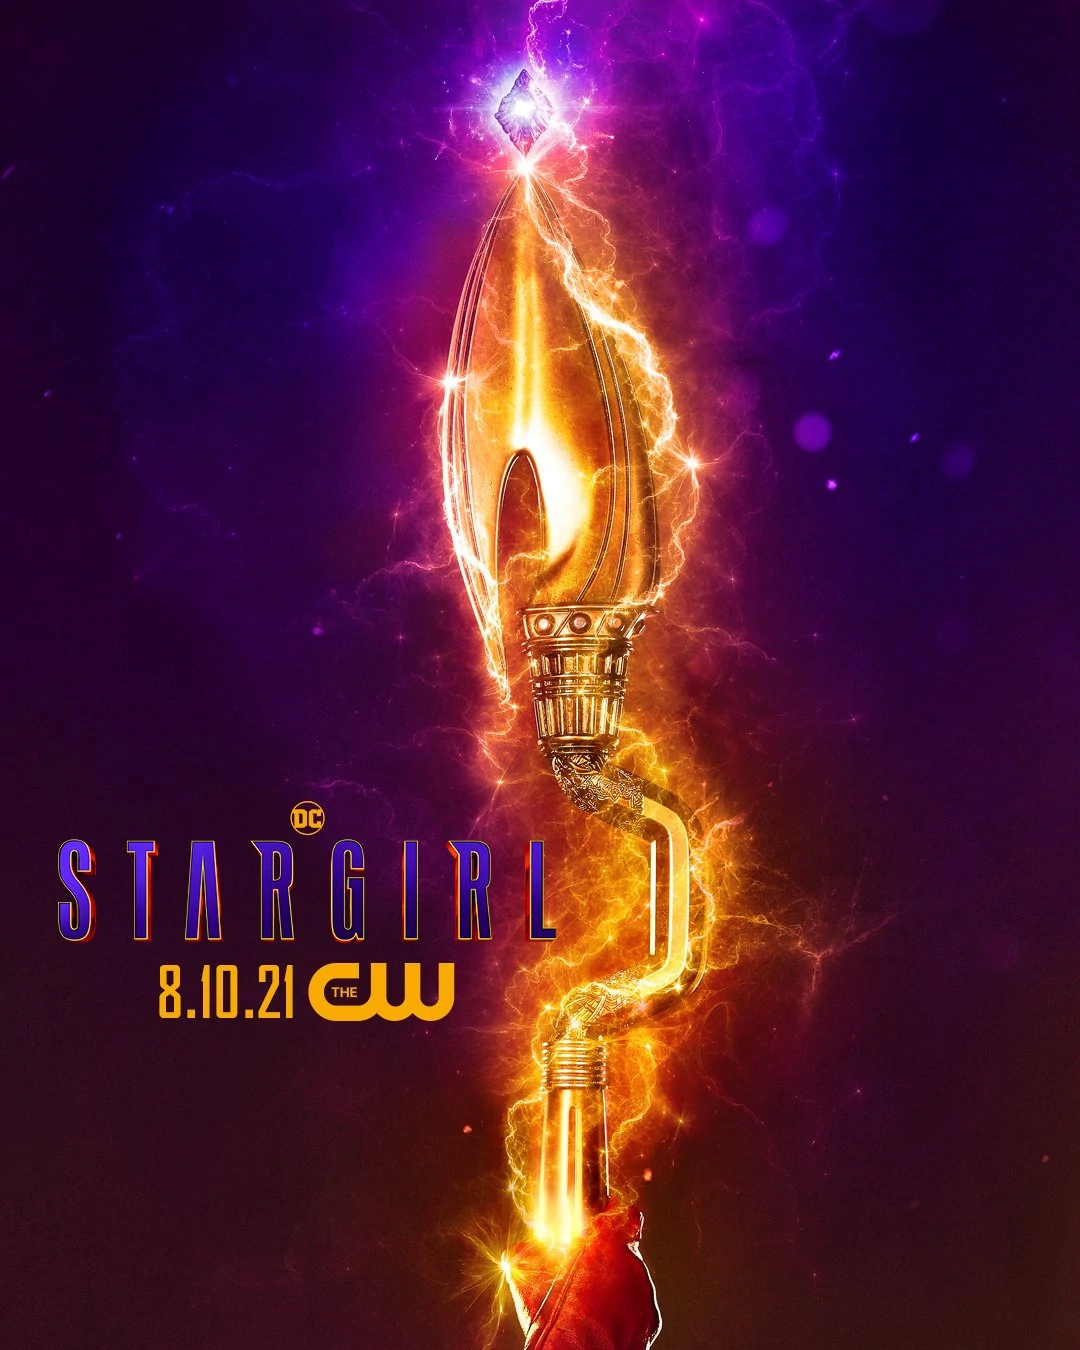 Stargirl Season 2 trailer and release date.